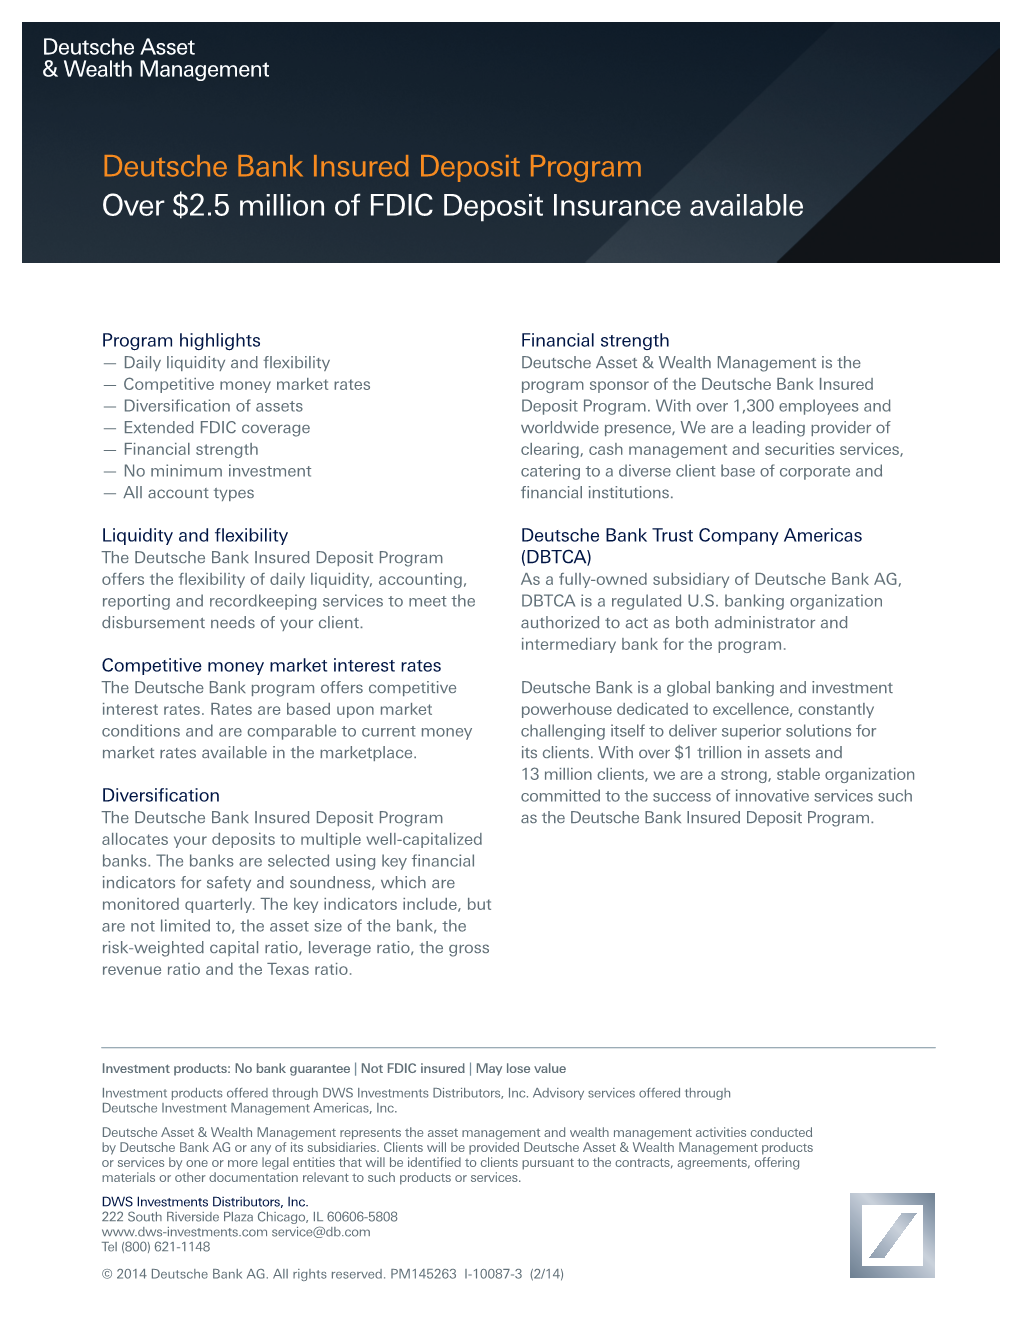 Deutsche Bank Insured Deposit Program Over $2.5 Million of FDIC Deposit Insurance Available